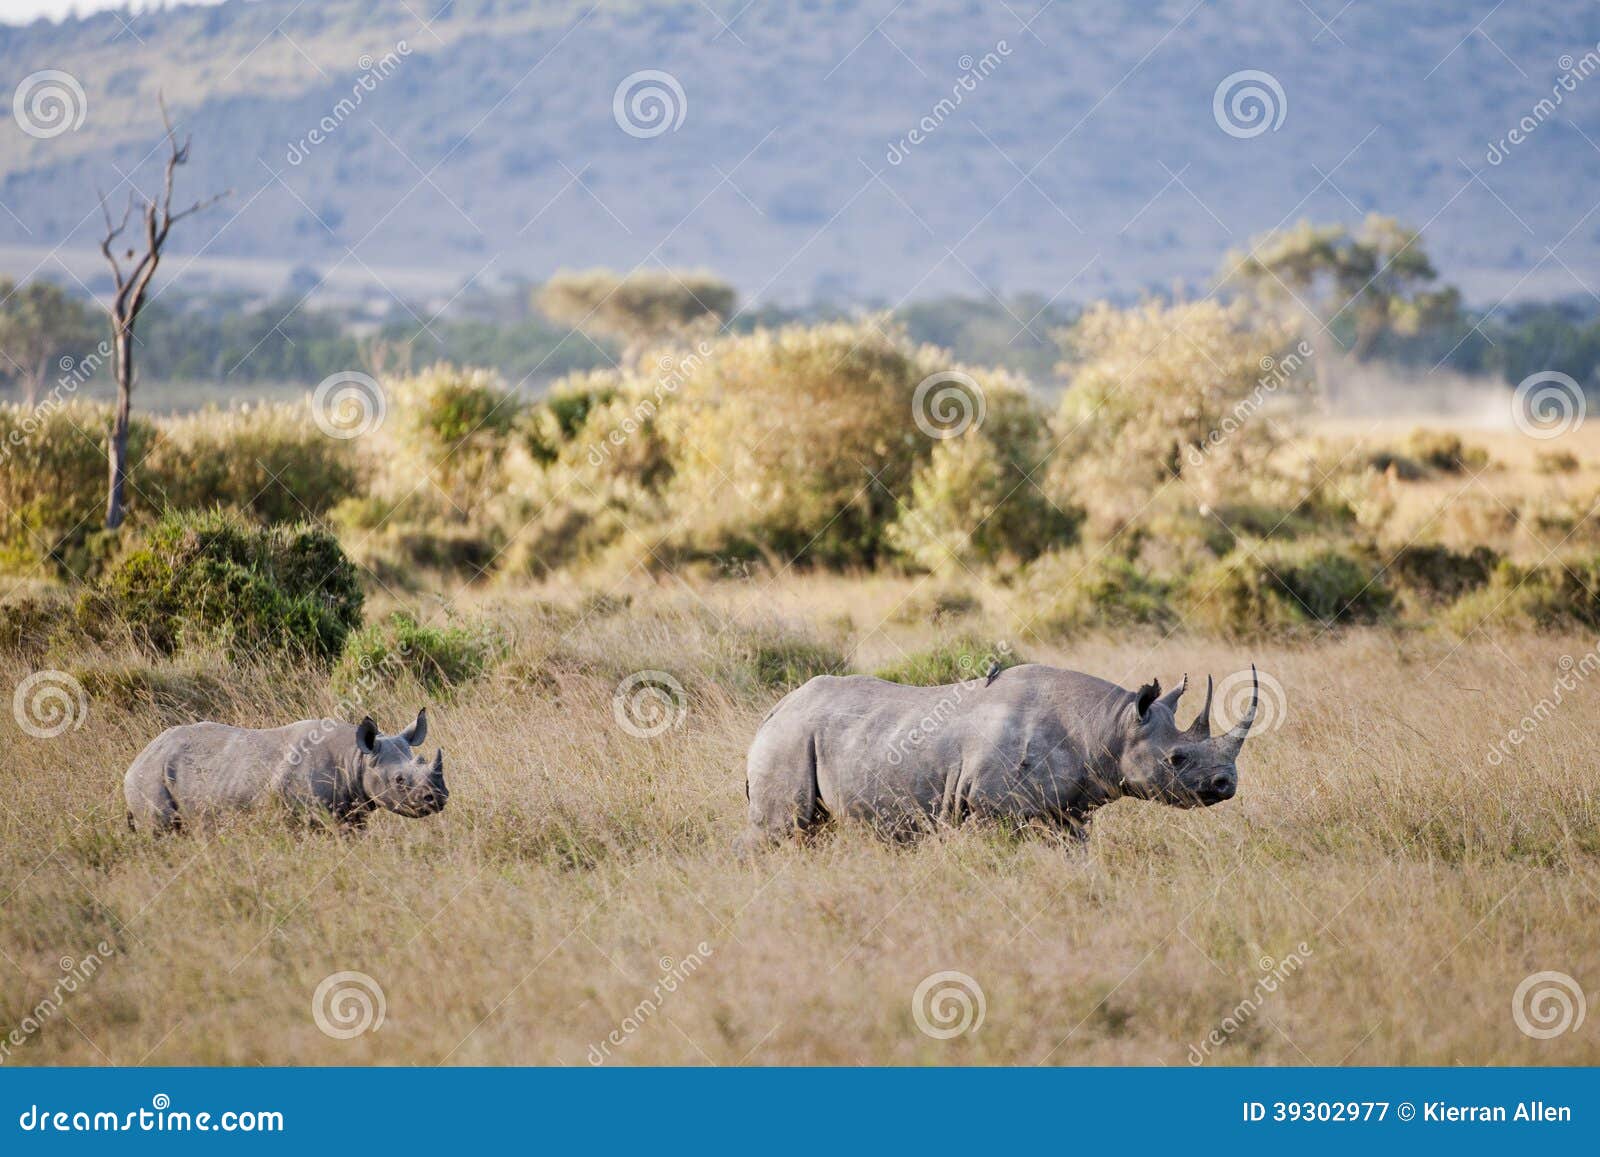 black rhino in masai mara, kenya